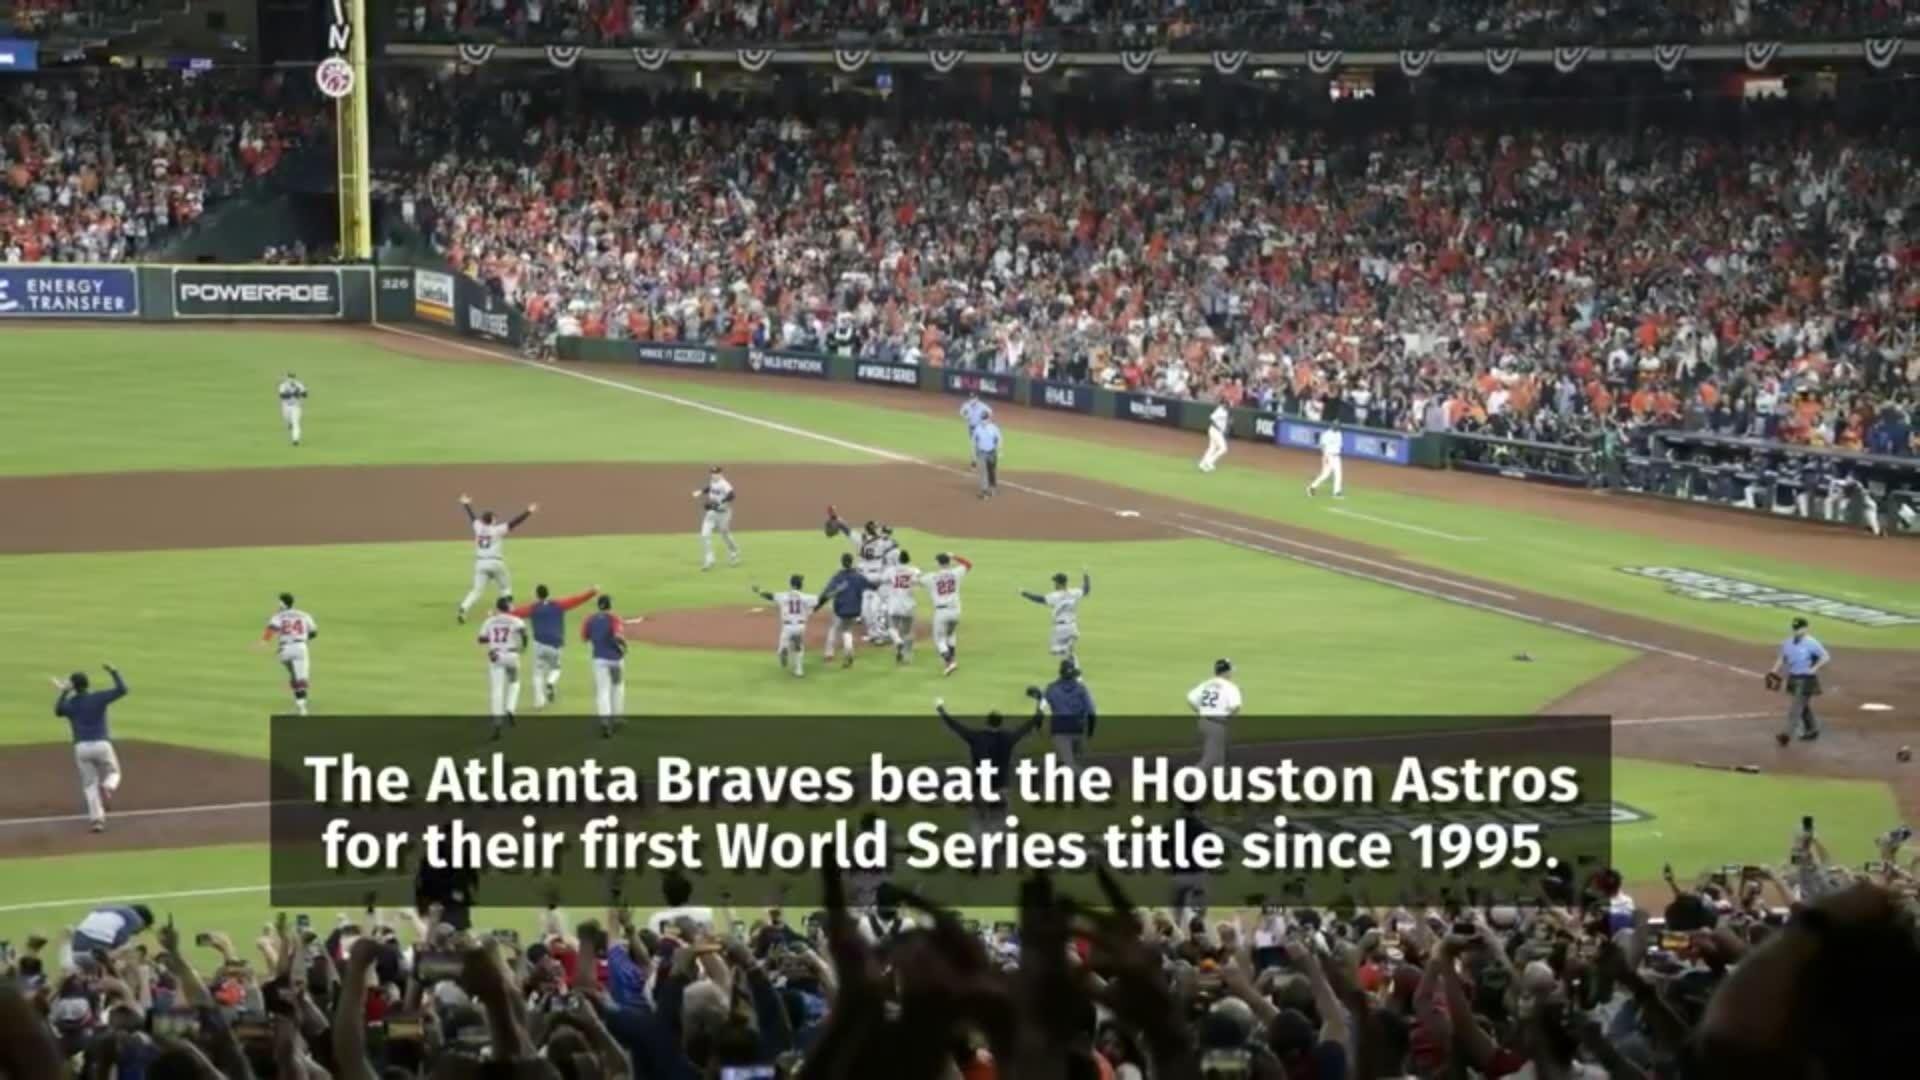 Atlanta Braves defeat Houston Astros, win 1st World Series title since 1995